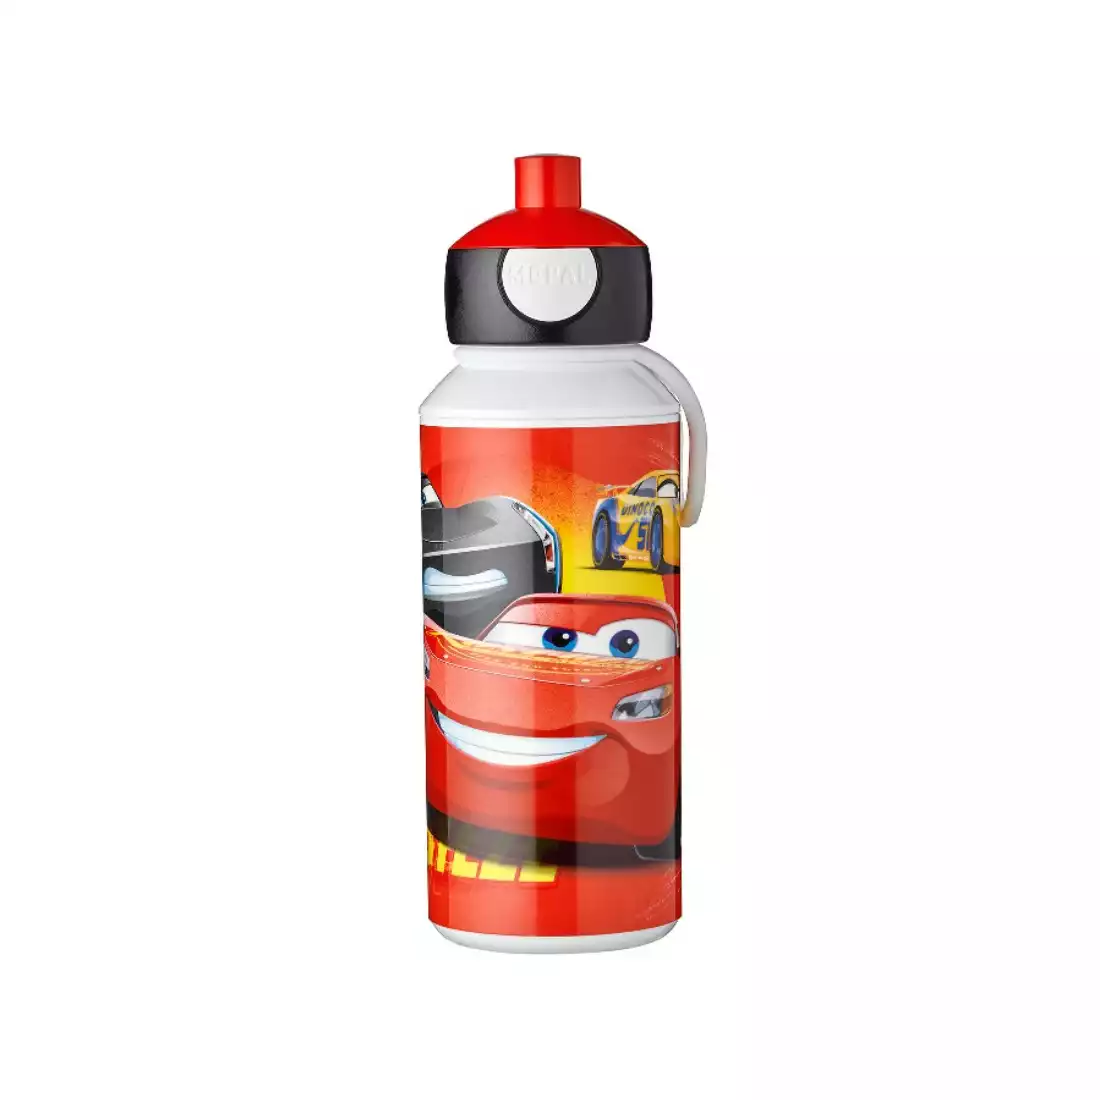 MEPAL CAMPUS POP UP vizes palack gyerekeknek 400ml Cars 